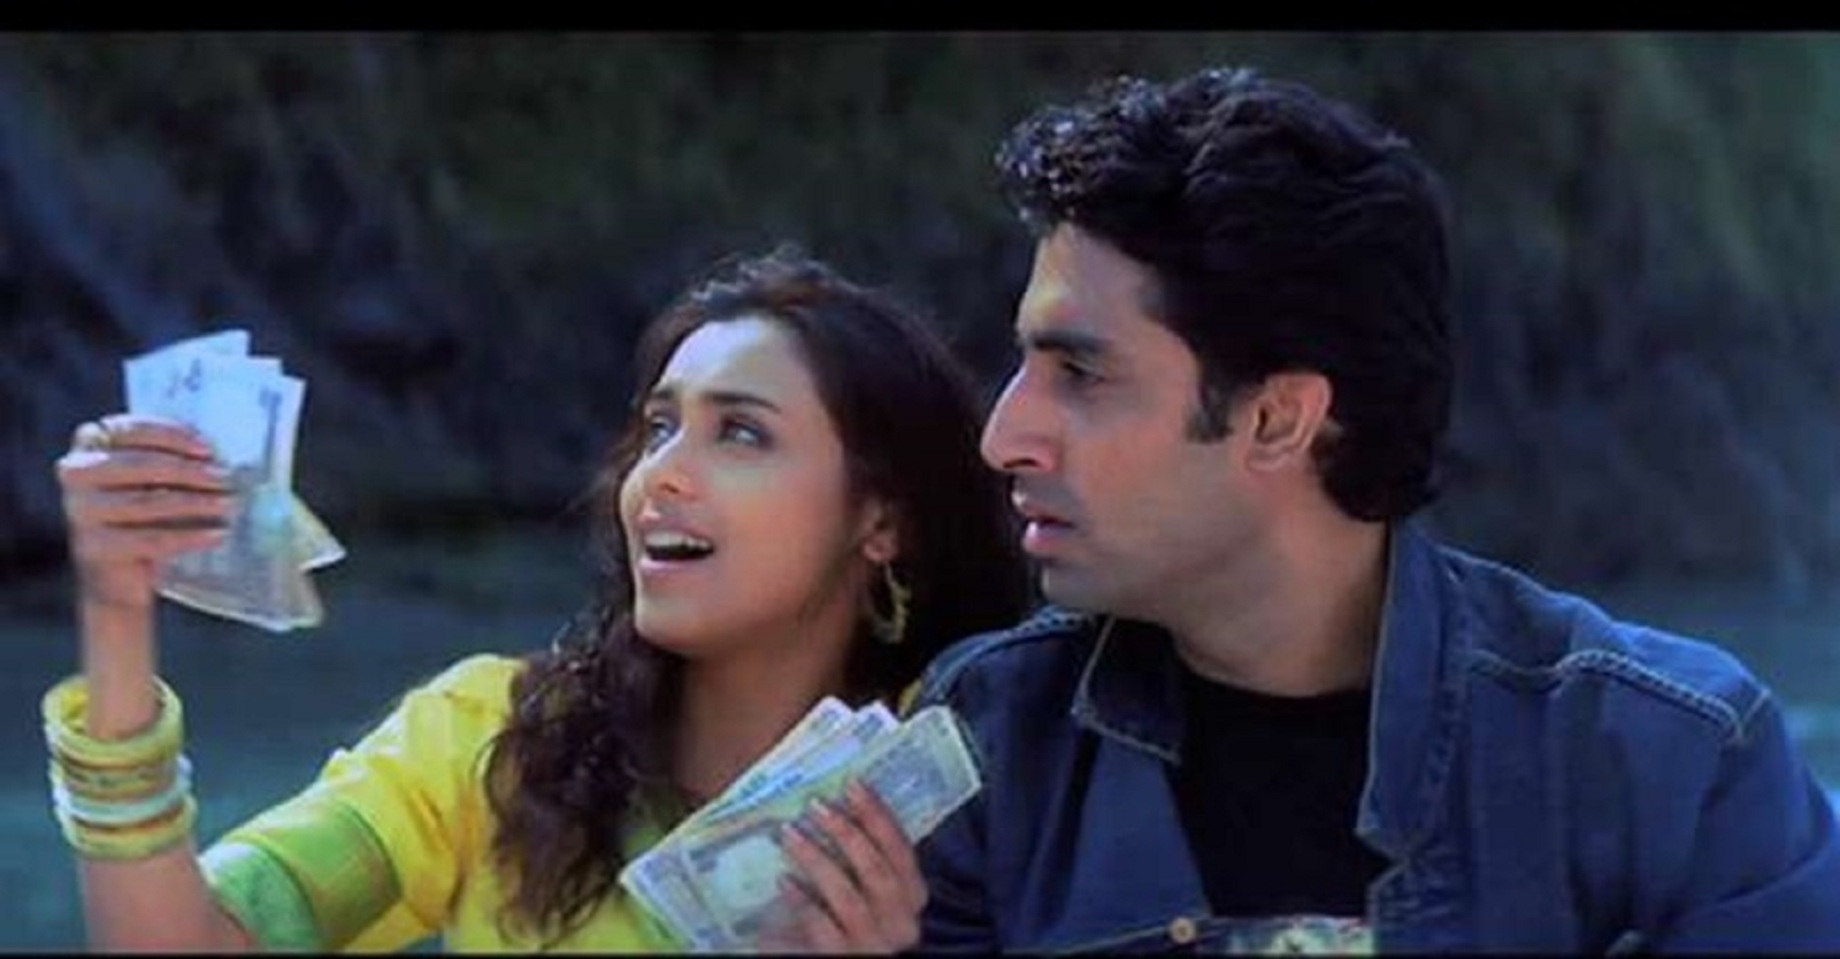 Bunty Aur Bubli Part 2: Rani Mukerji And Abhishek Bachchan To Reunite For The Sequel!